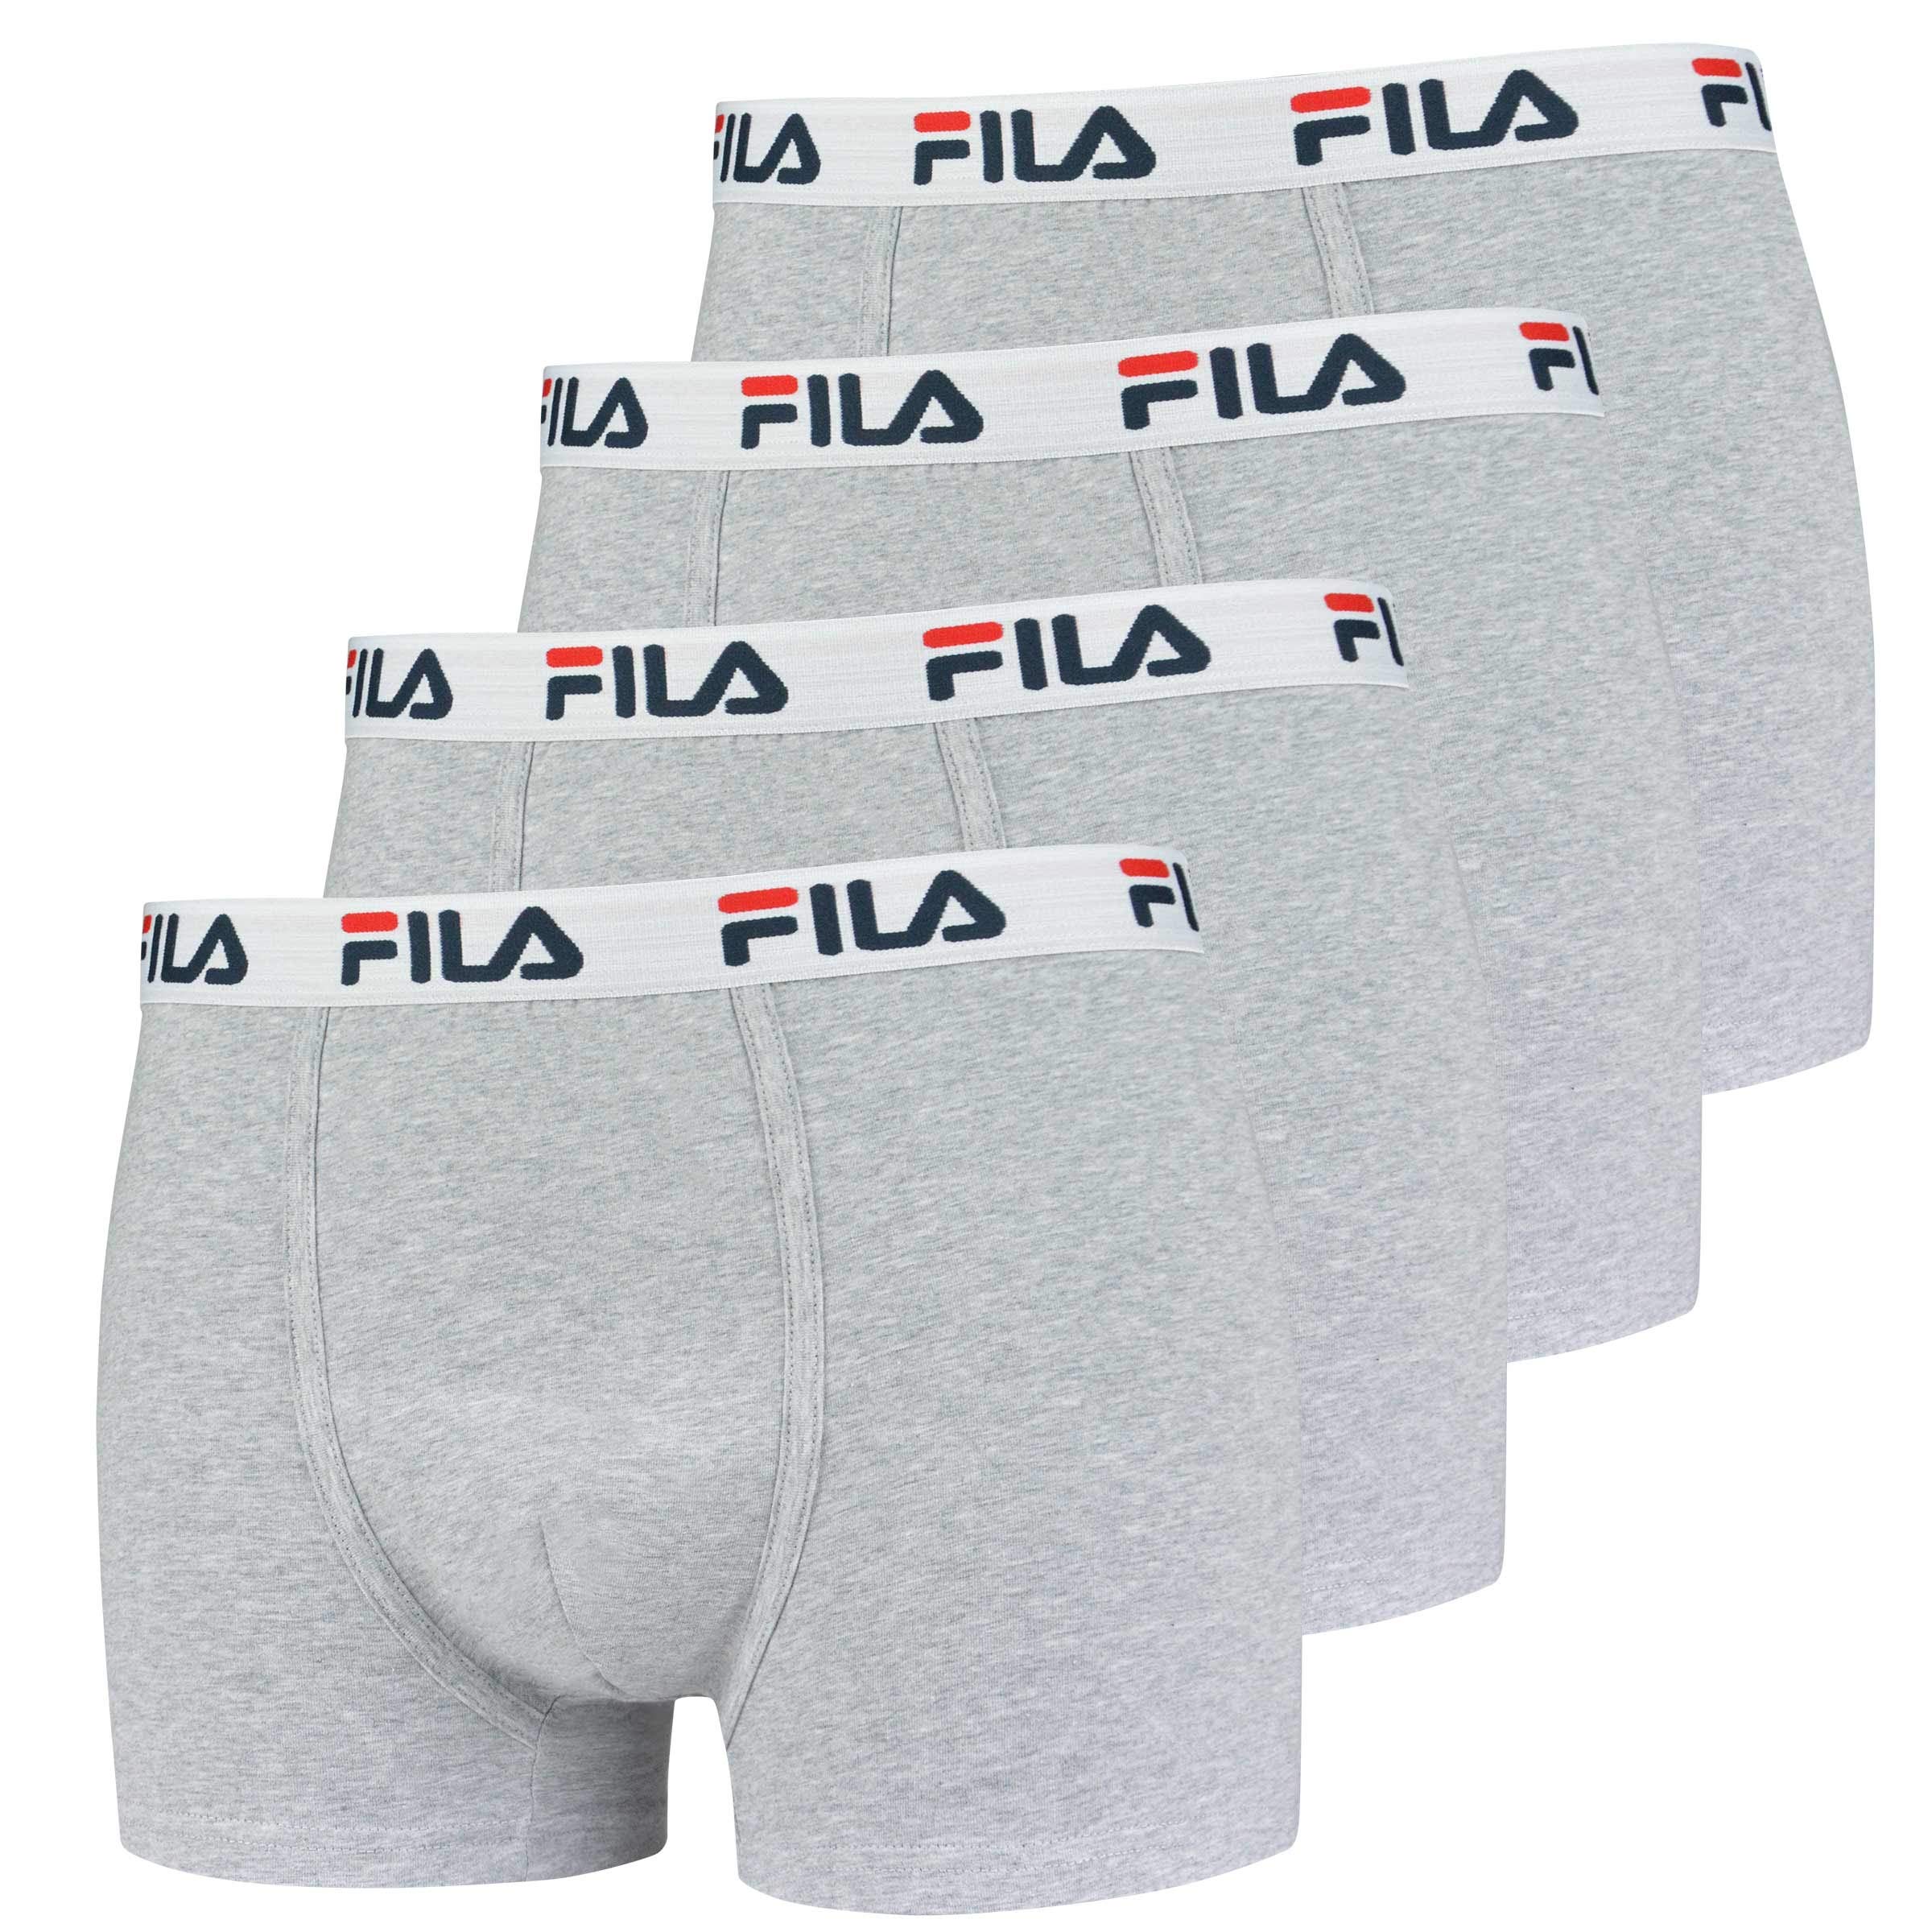 FILA 4er Vorteilspack Herren Boxershorts - Logo Pants - Einfarbig - Bequem - Stretch - viele Farben (Grau, L - 4er Pack)